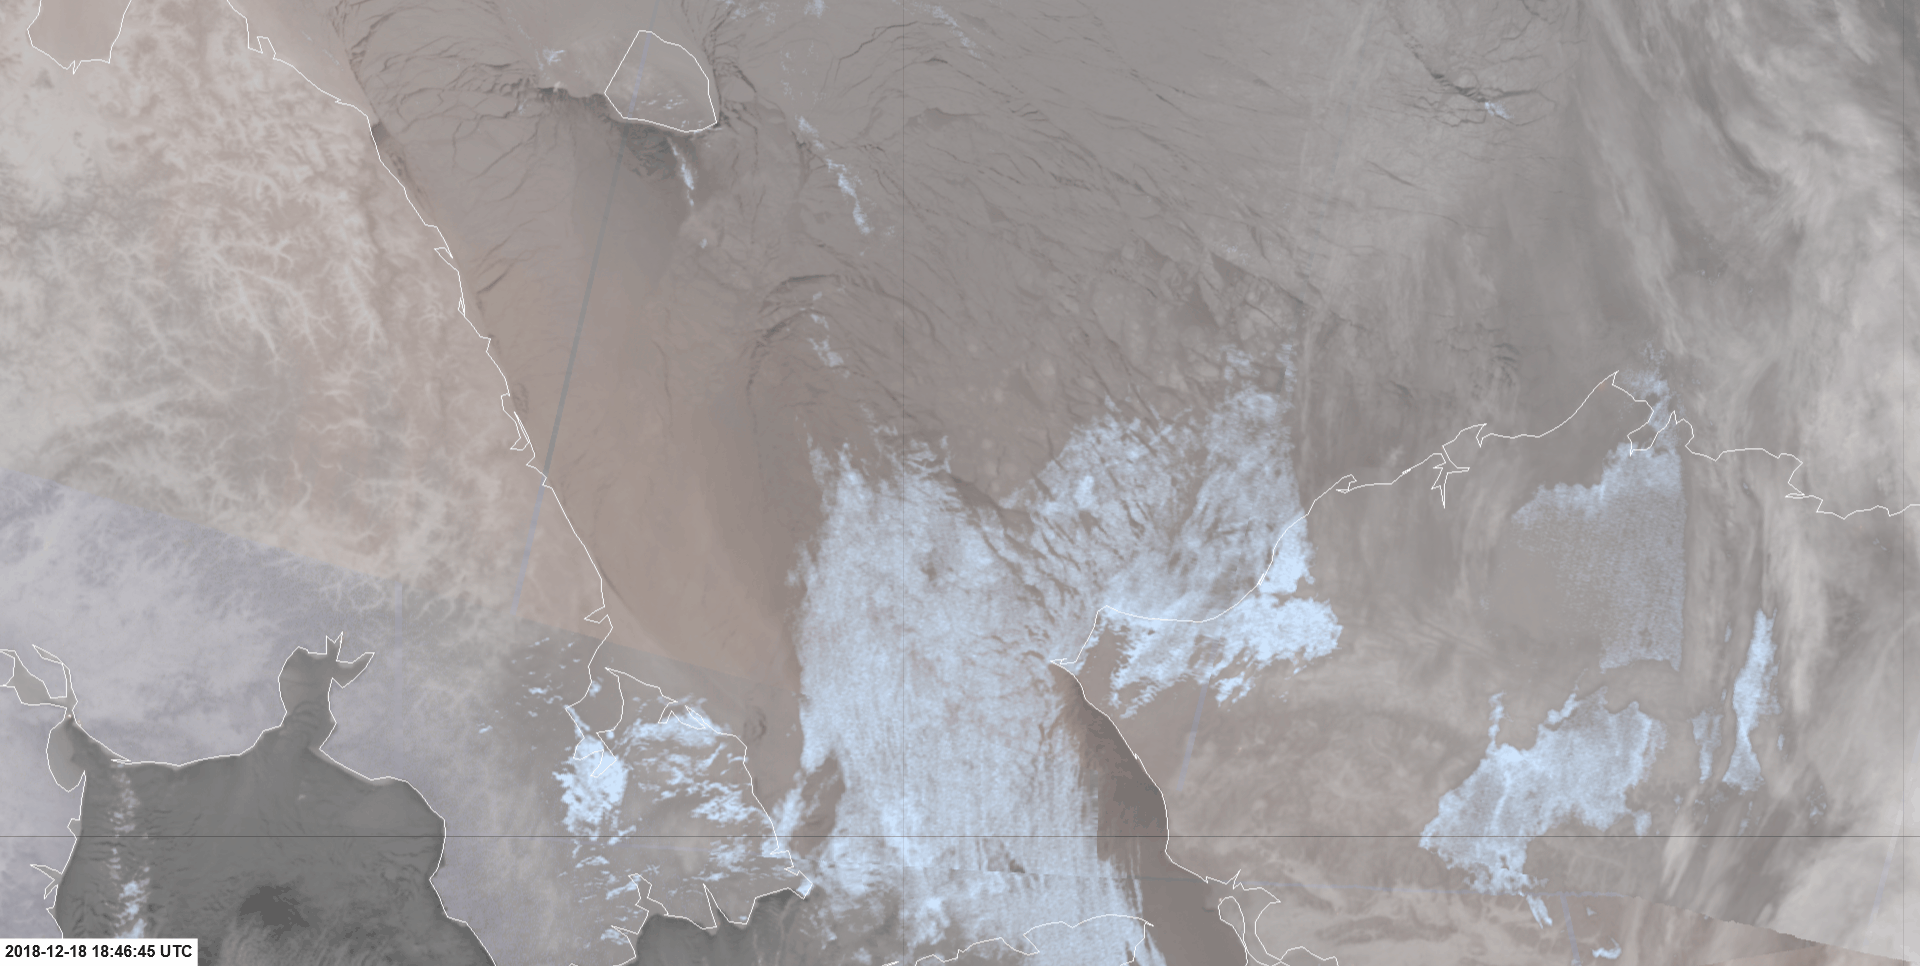 GeoColor imagery of Arctic Circle, taken by JPSS satellites.